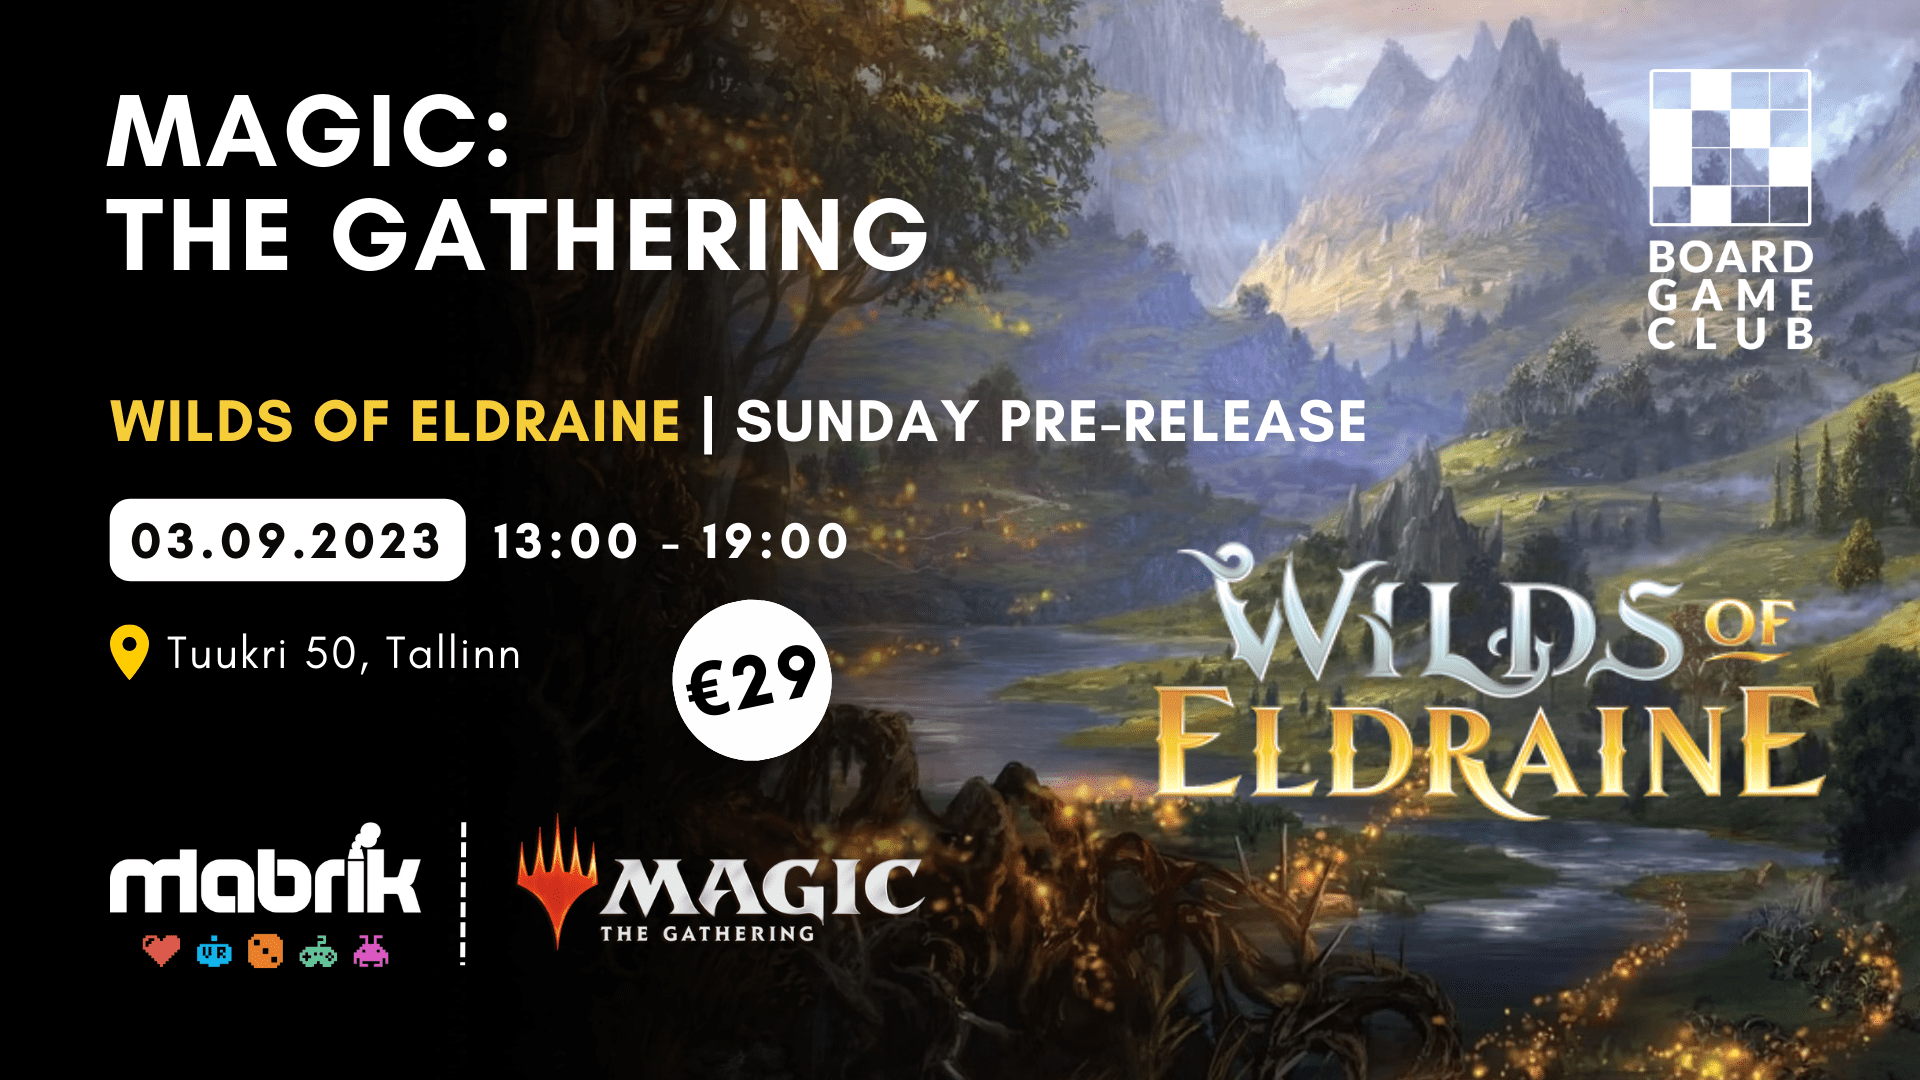 Events - 03.09.2023 - MTG: Wilds of Eldraine Sunday Pre-Release